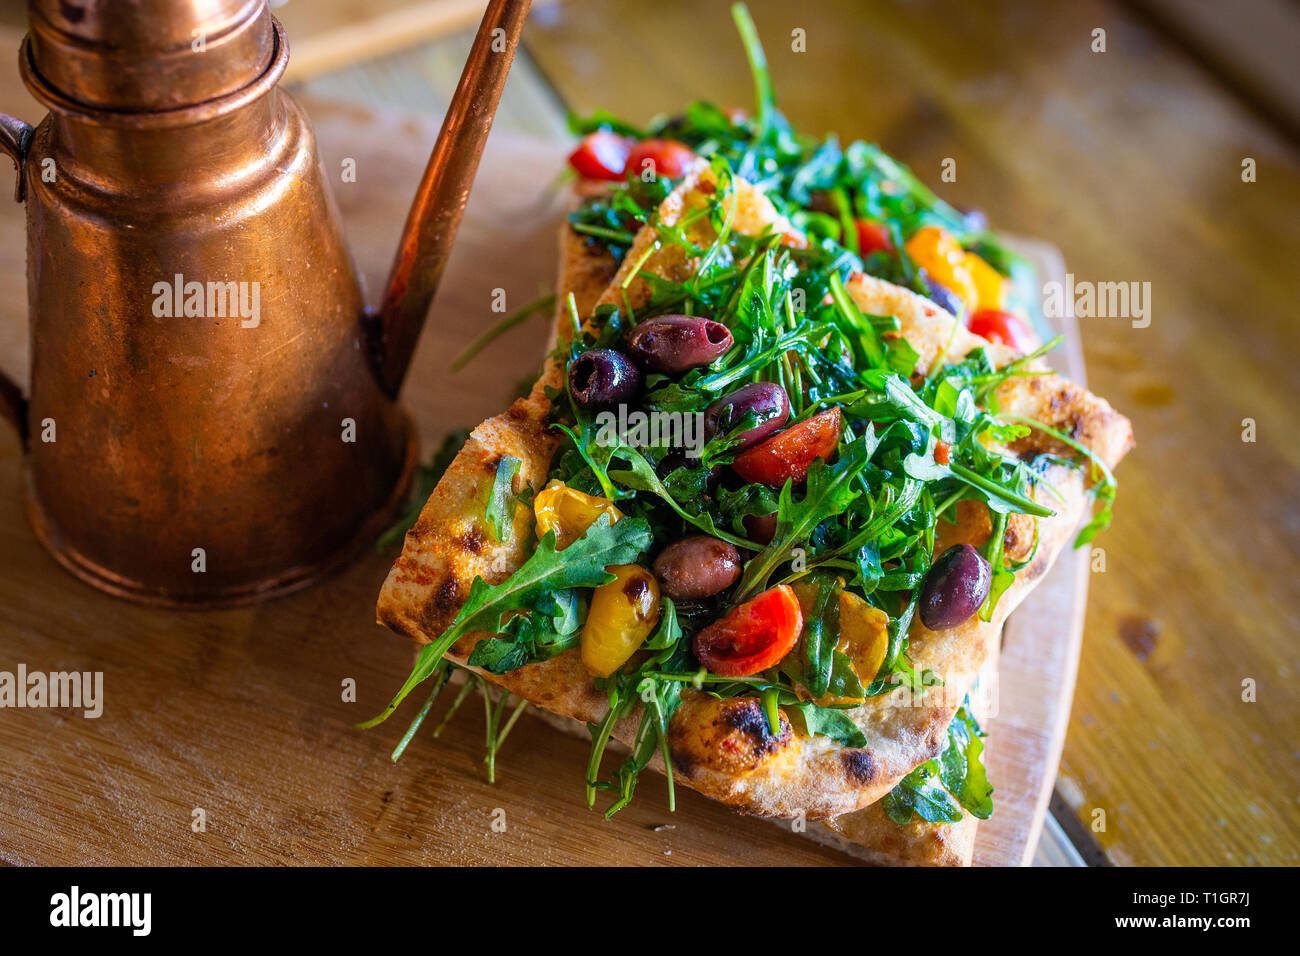 Authentic Italian Roman style vegan pizza slices on a wooden board in a pizzeria Trattoria style restaurant. Italian street food Stock Photo